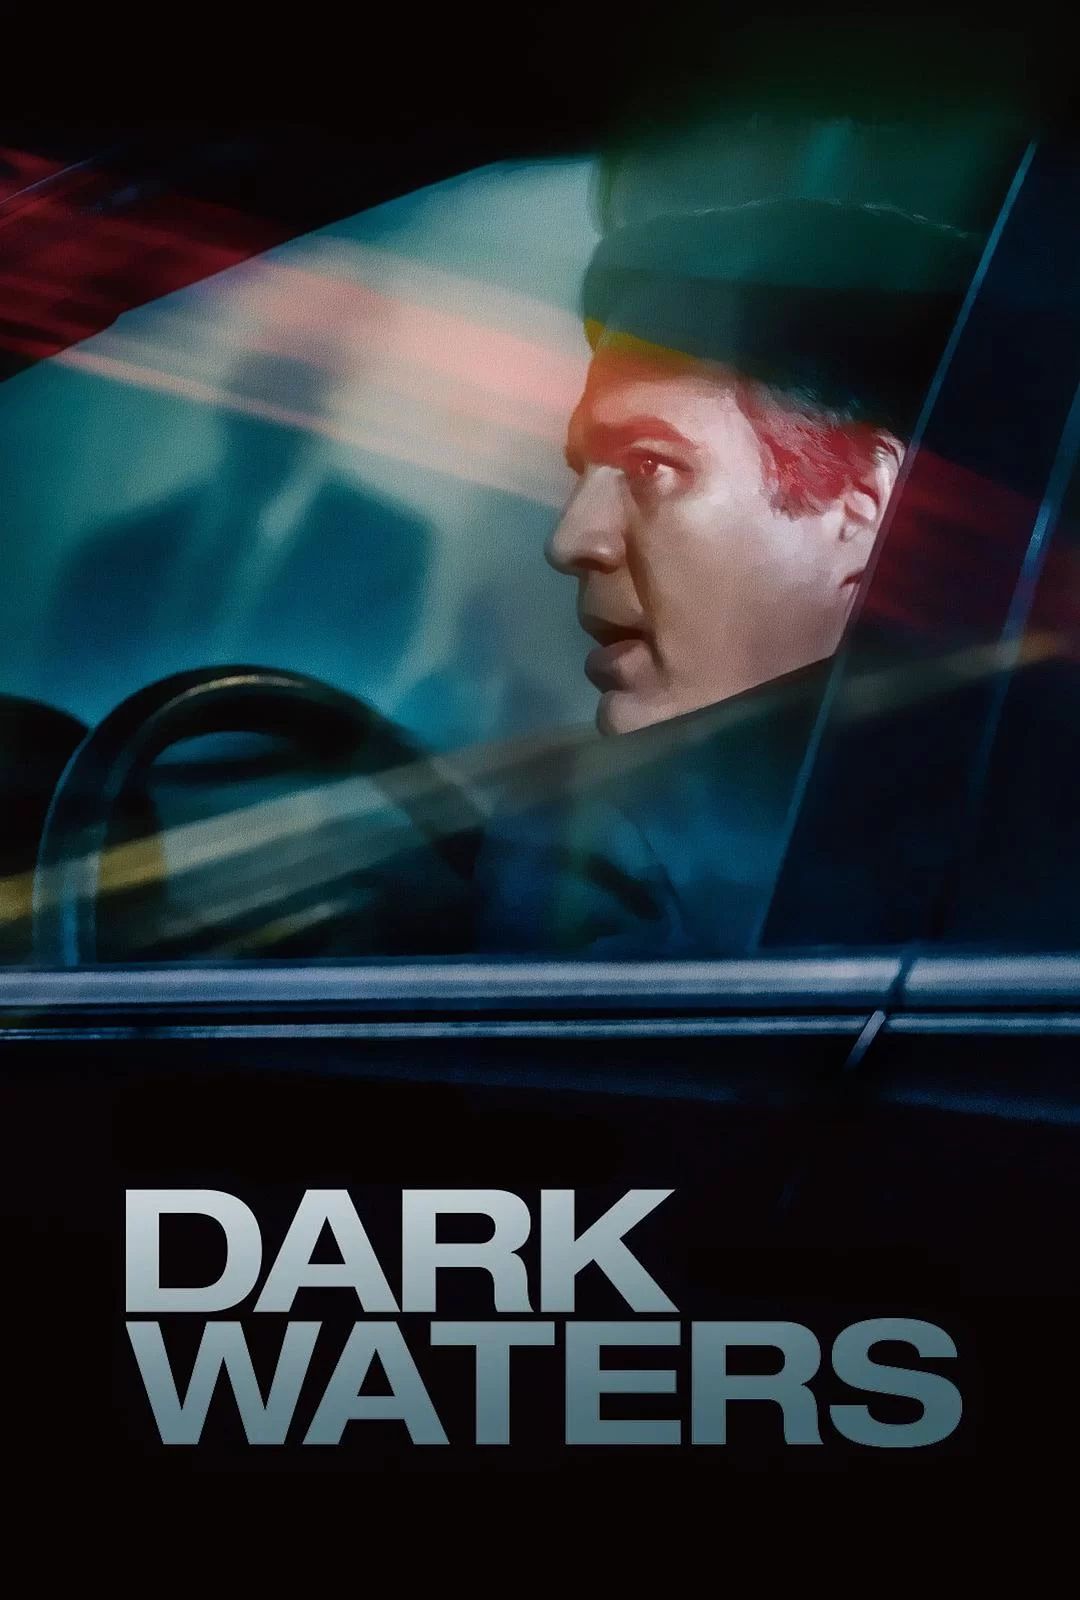 黑水 蓝光原盘下载+高清MKV版/黑水风暴(台) / 黑暗水域 / 空转 / 演习 / Dry Run / The Lawyer Who Became DuPont’s Worst Nightmare 2019 Dark Waters 42.2G